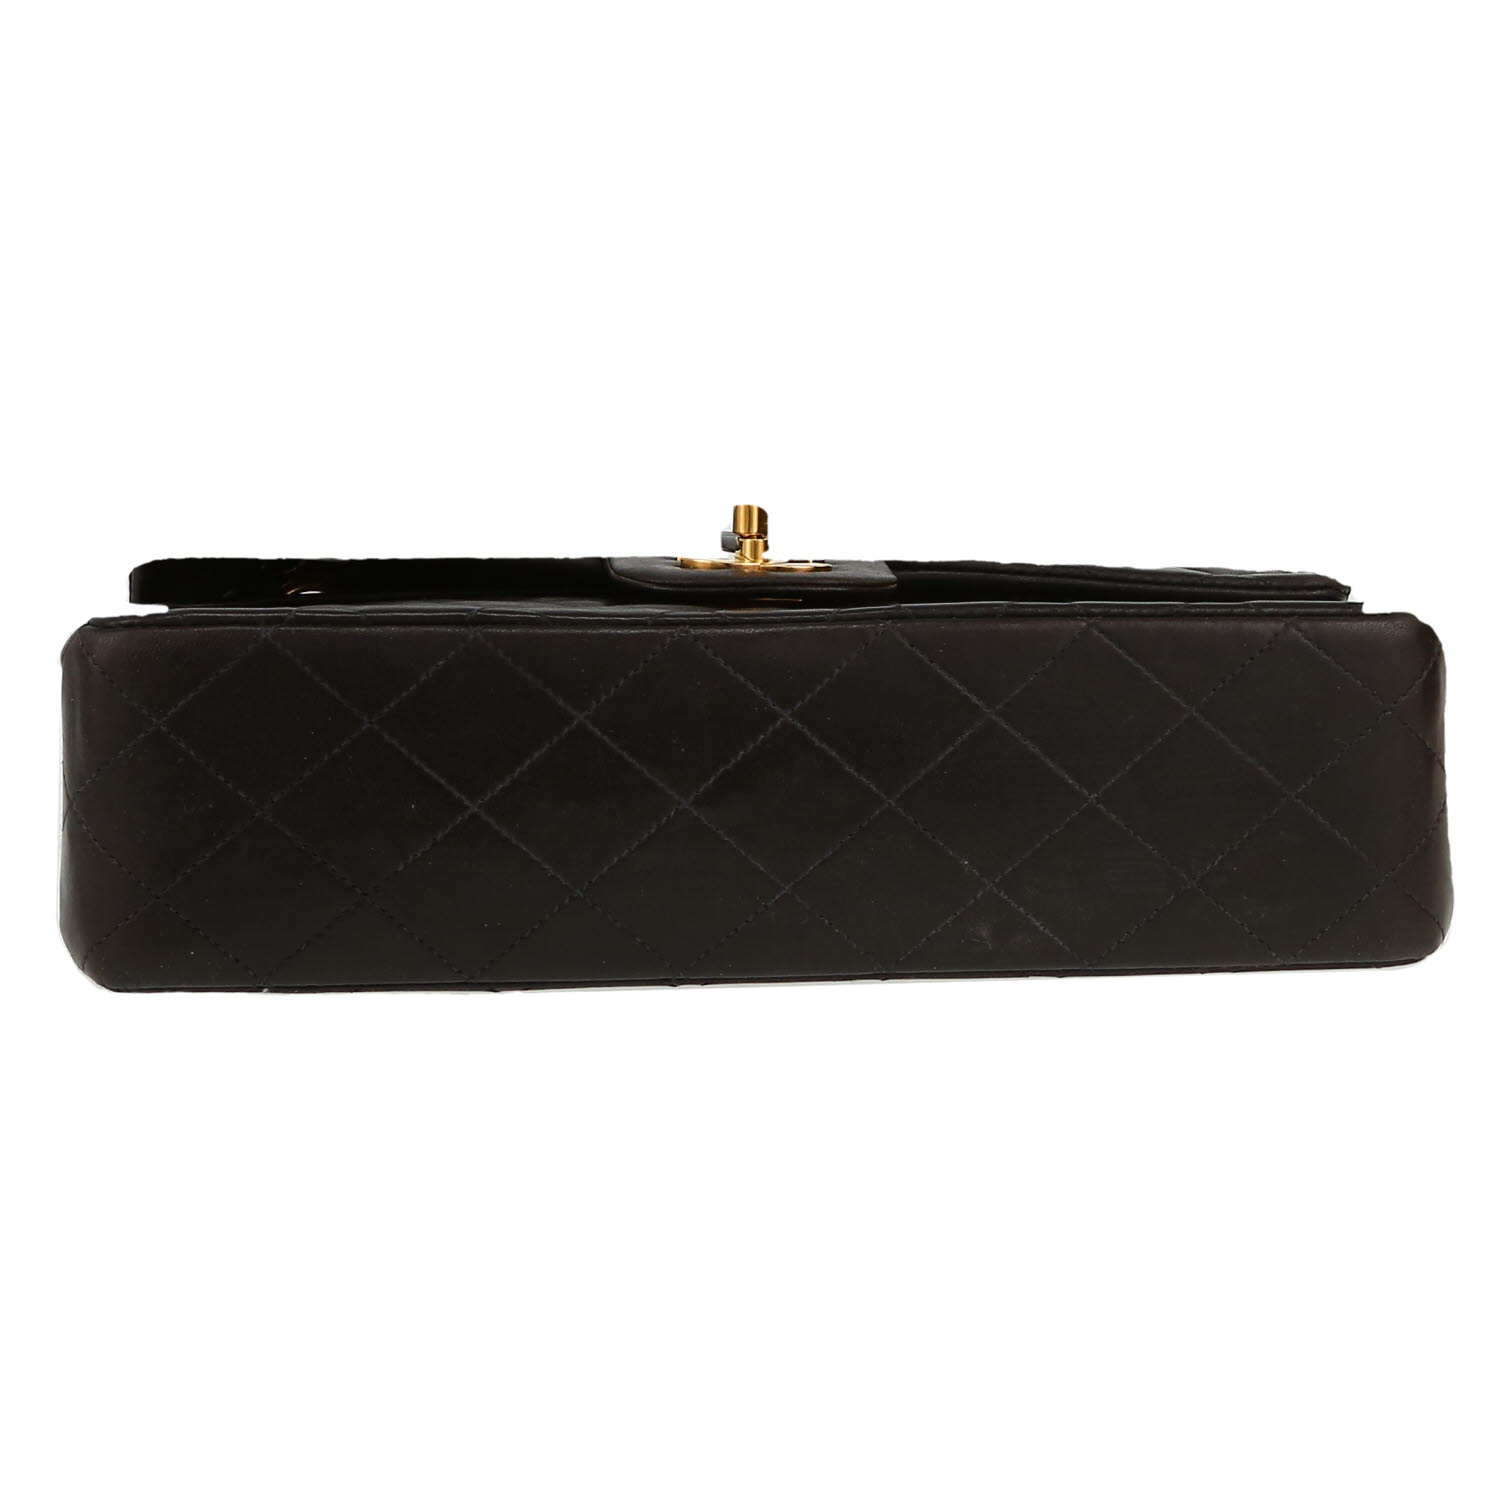 Chanel Timeless Handbag 405282 | Collector Square